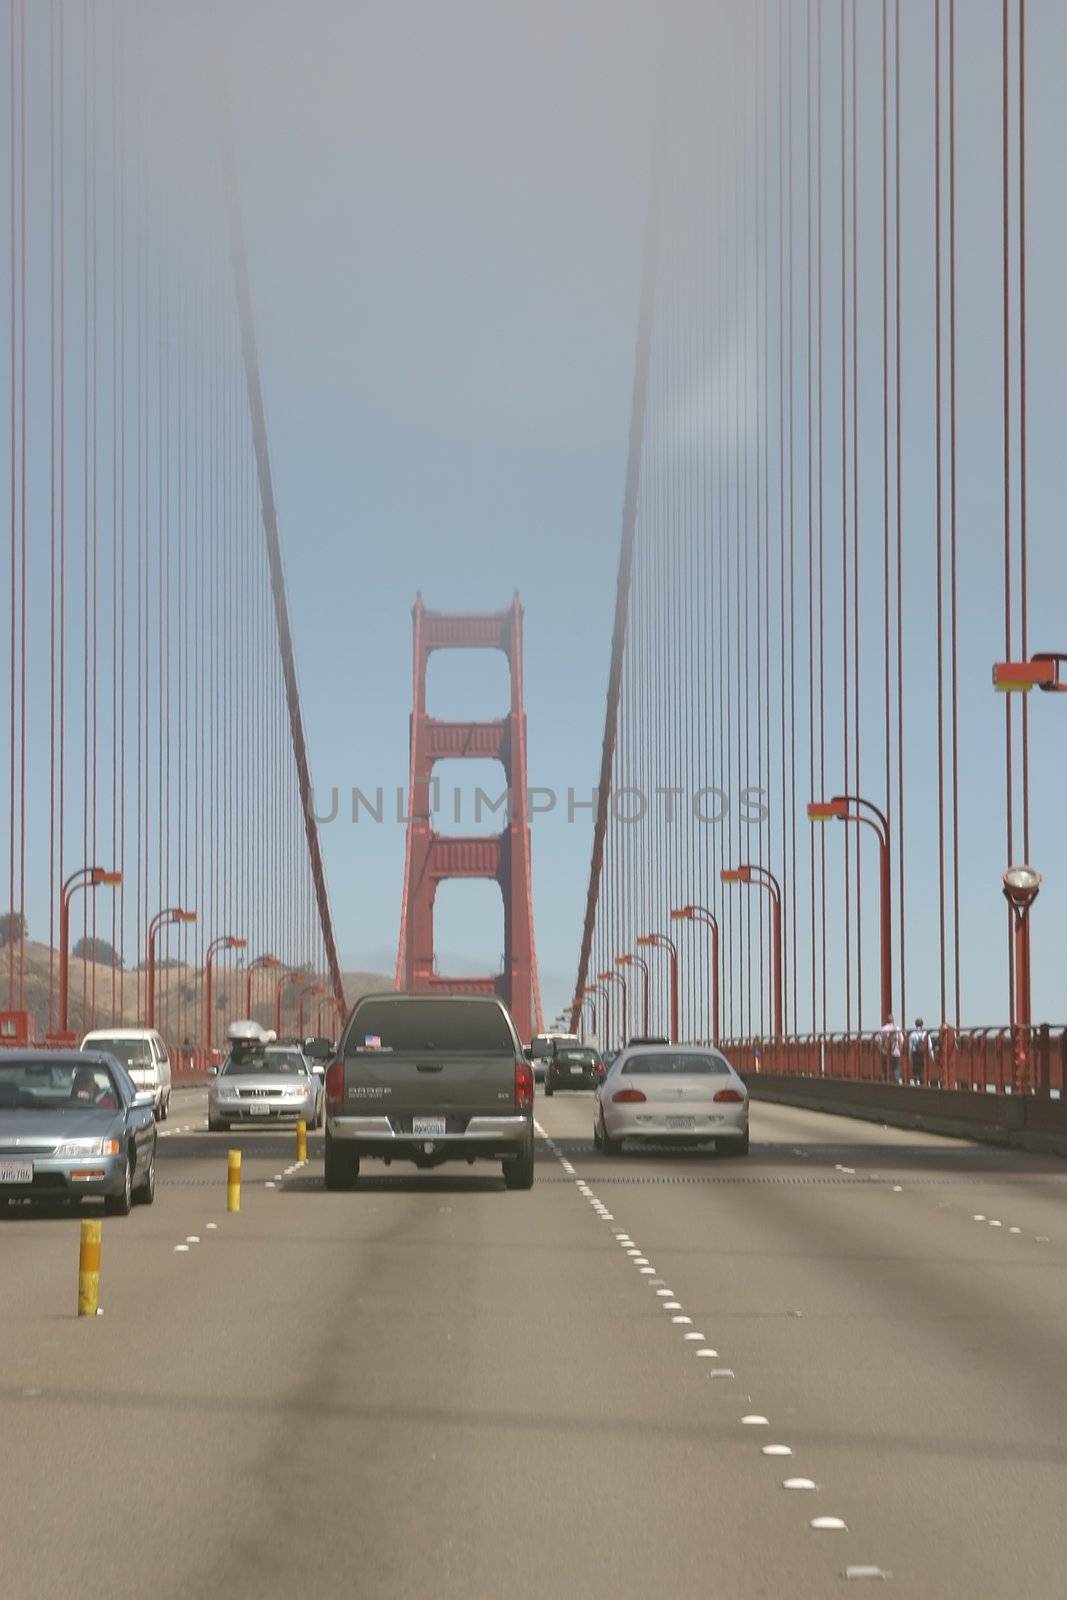 Golden Gate by melastmohican